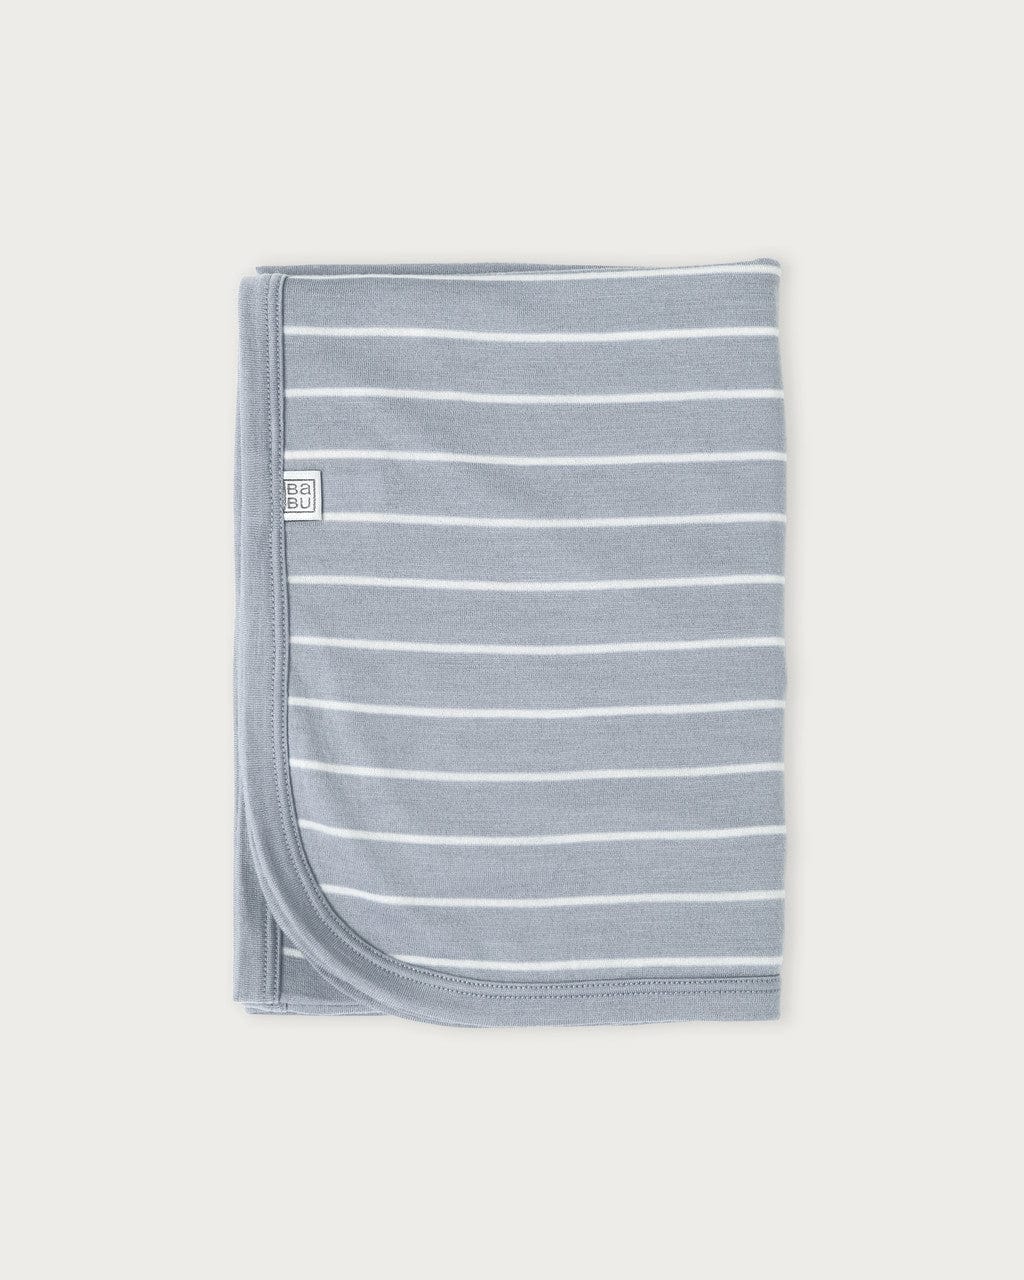 Babu Accessory Blanket Periwinkle Stripe Merino Swaddle Wrap